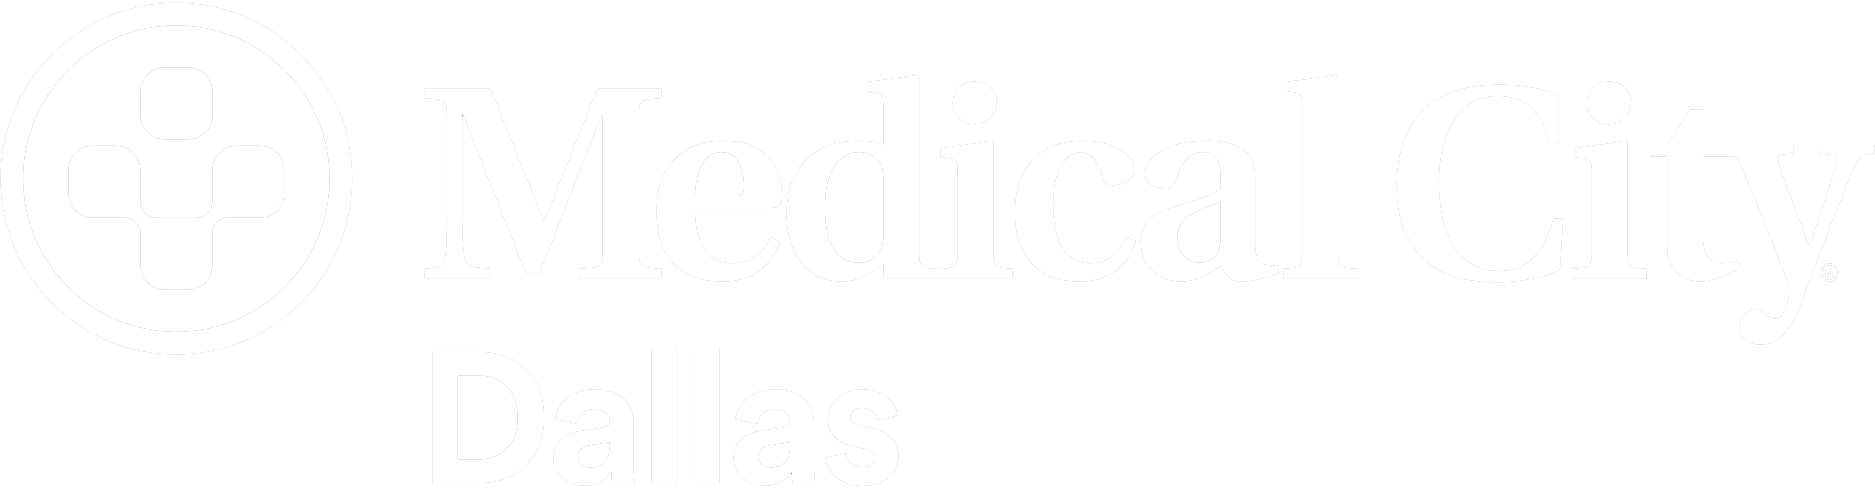 Medical White Logo - Medical City Dallas Hospital - Dallas, TX | Medical City Dallas